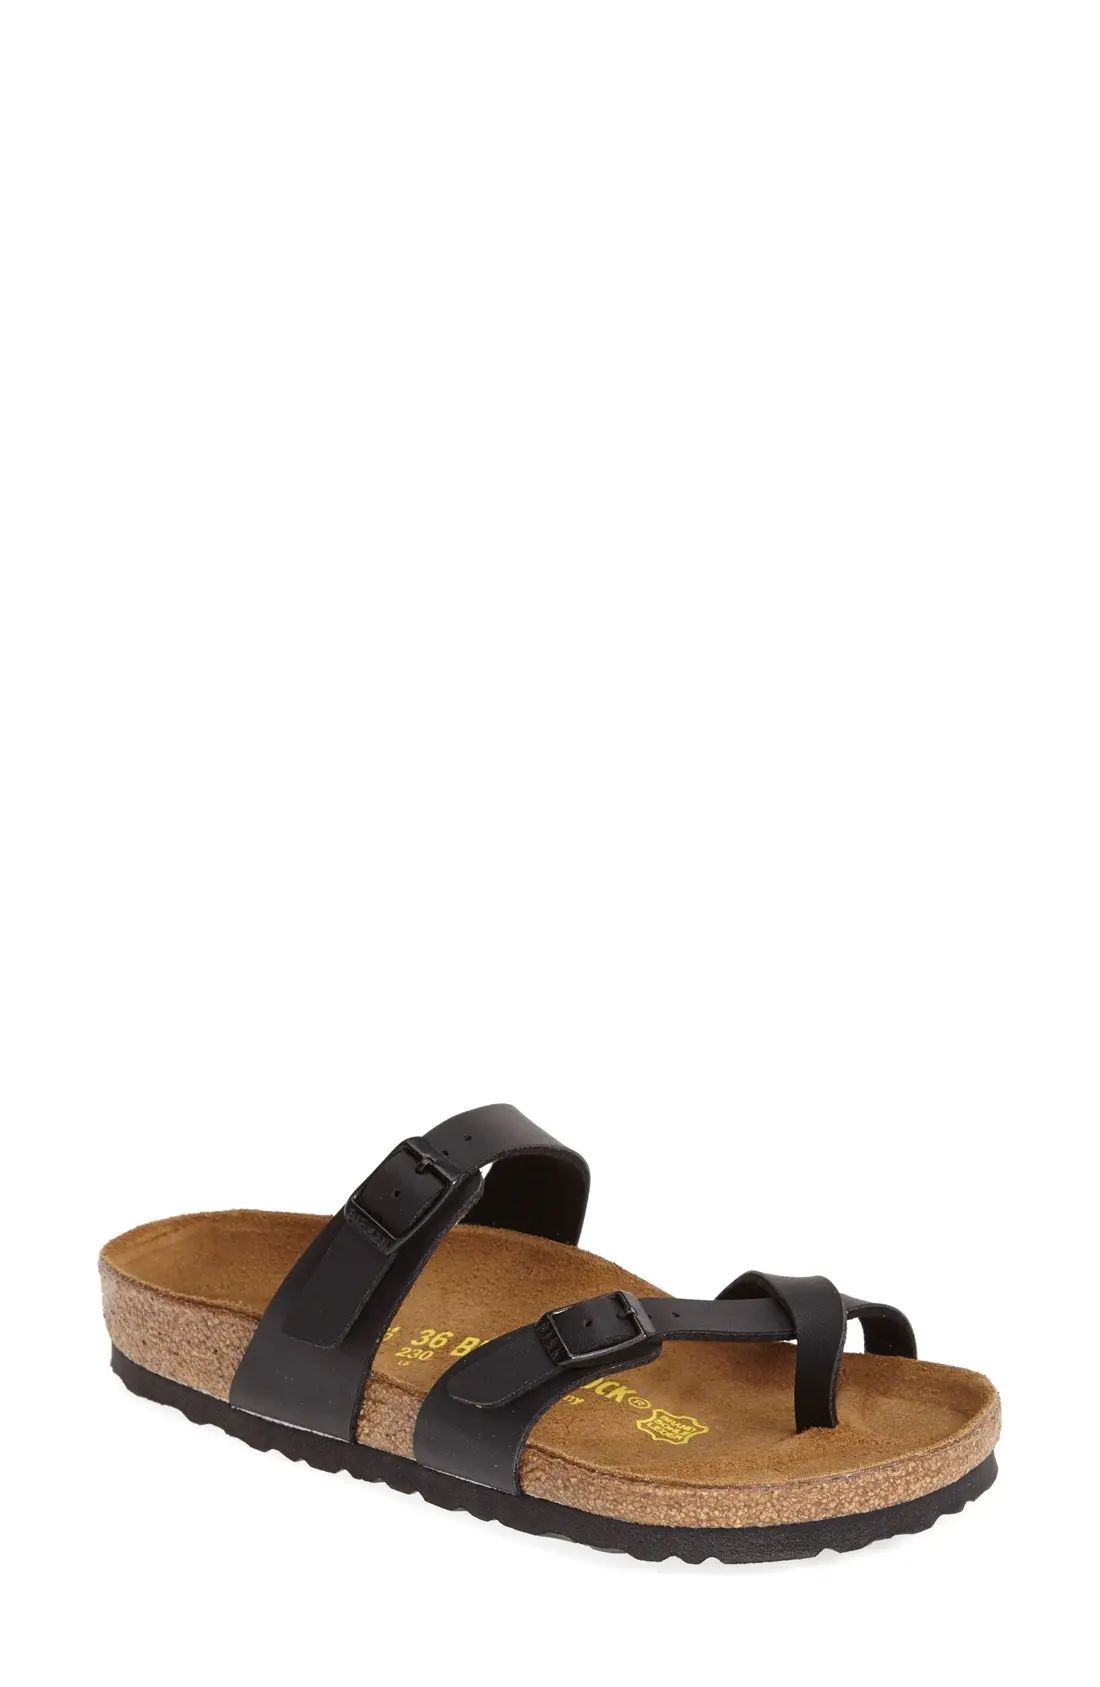 Women's Birkenstock Mayari Birko-Flor Slide Sandal, Size 8-8.5US / 39EU B - Black | Nordstrom